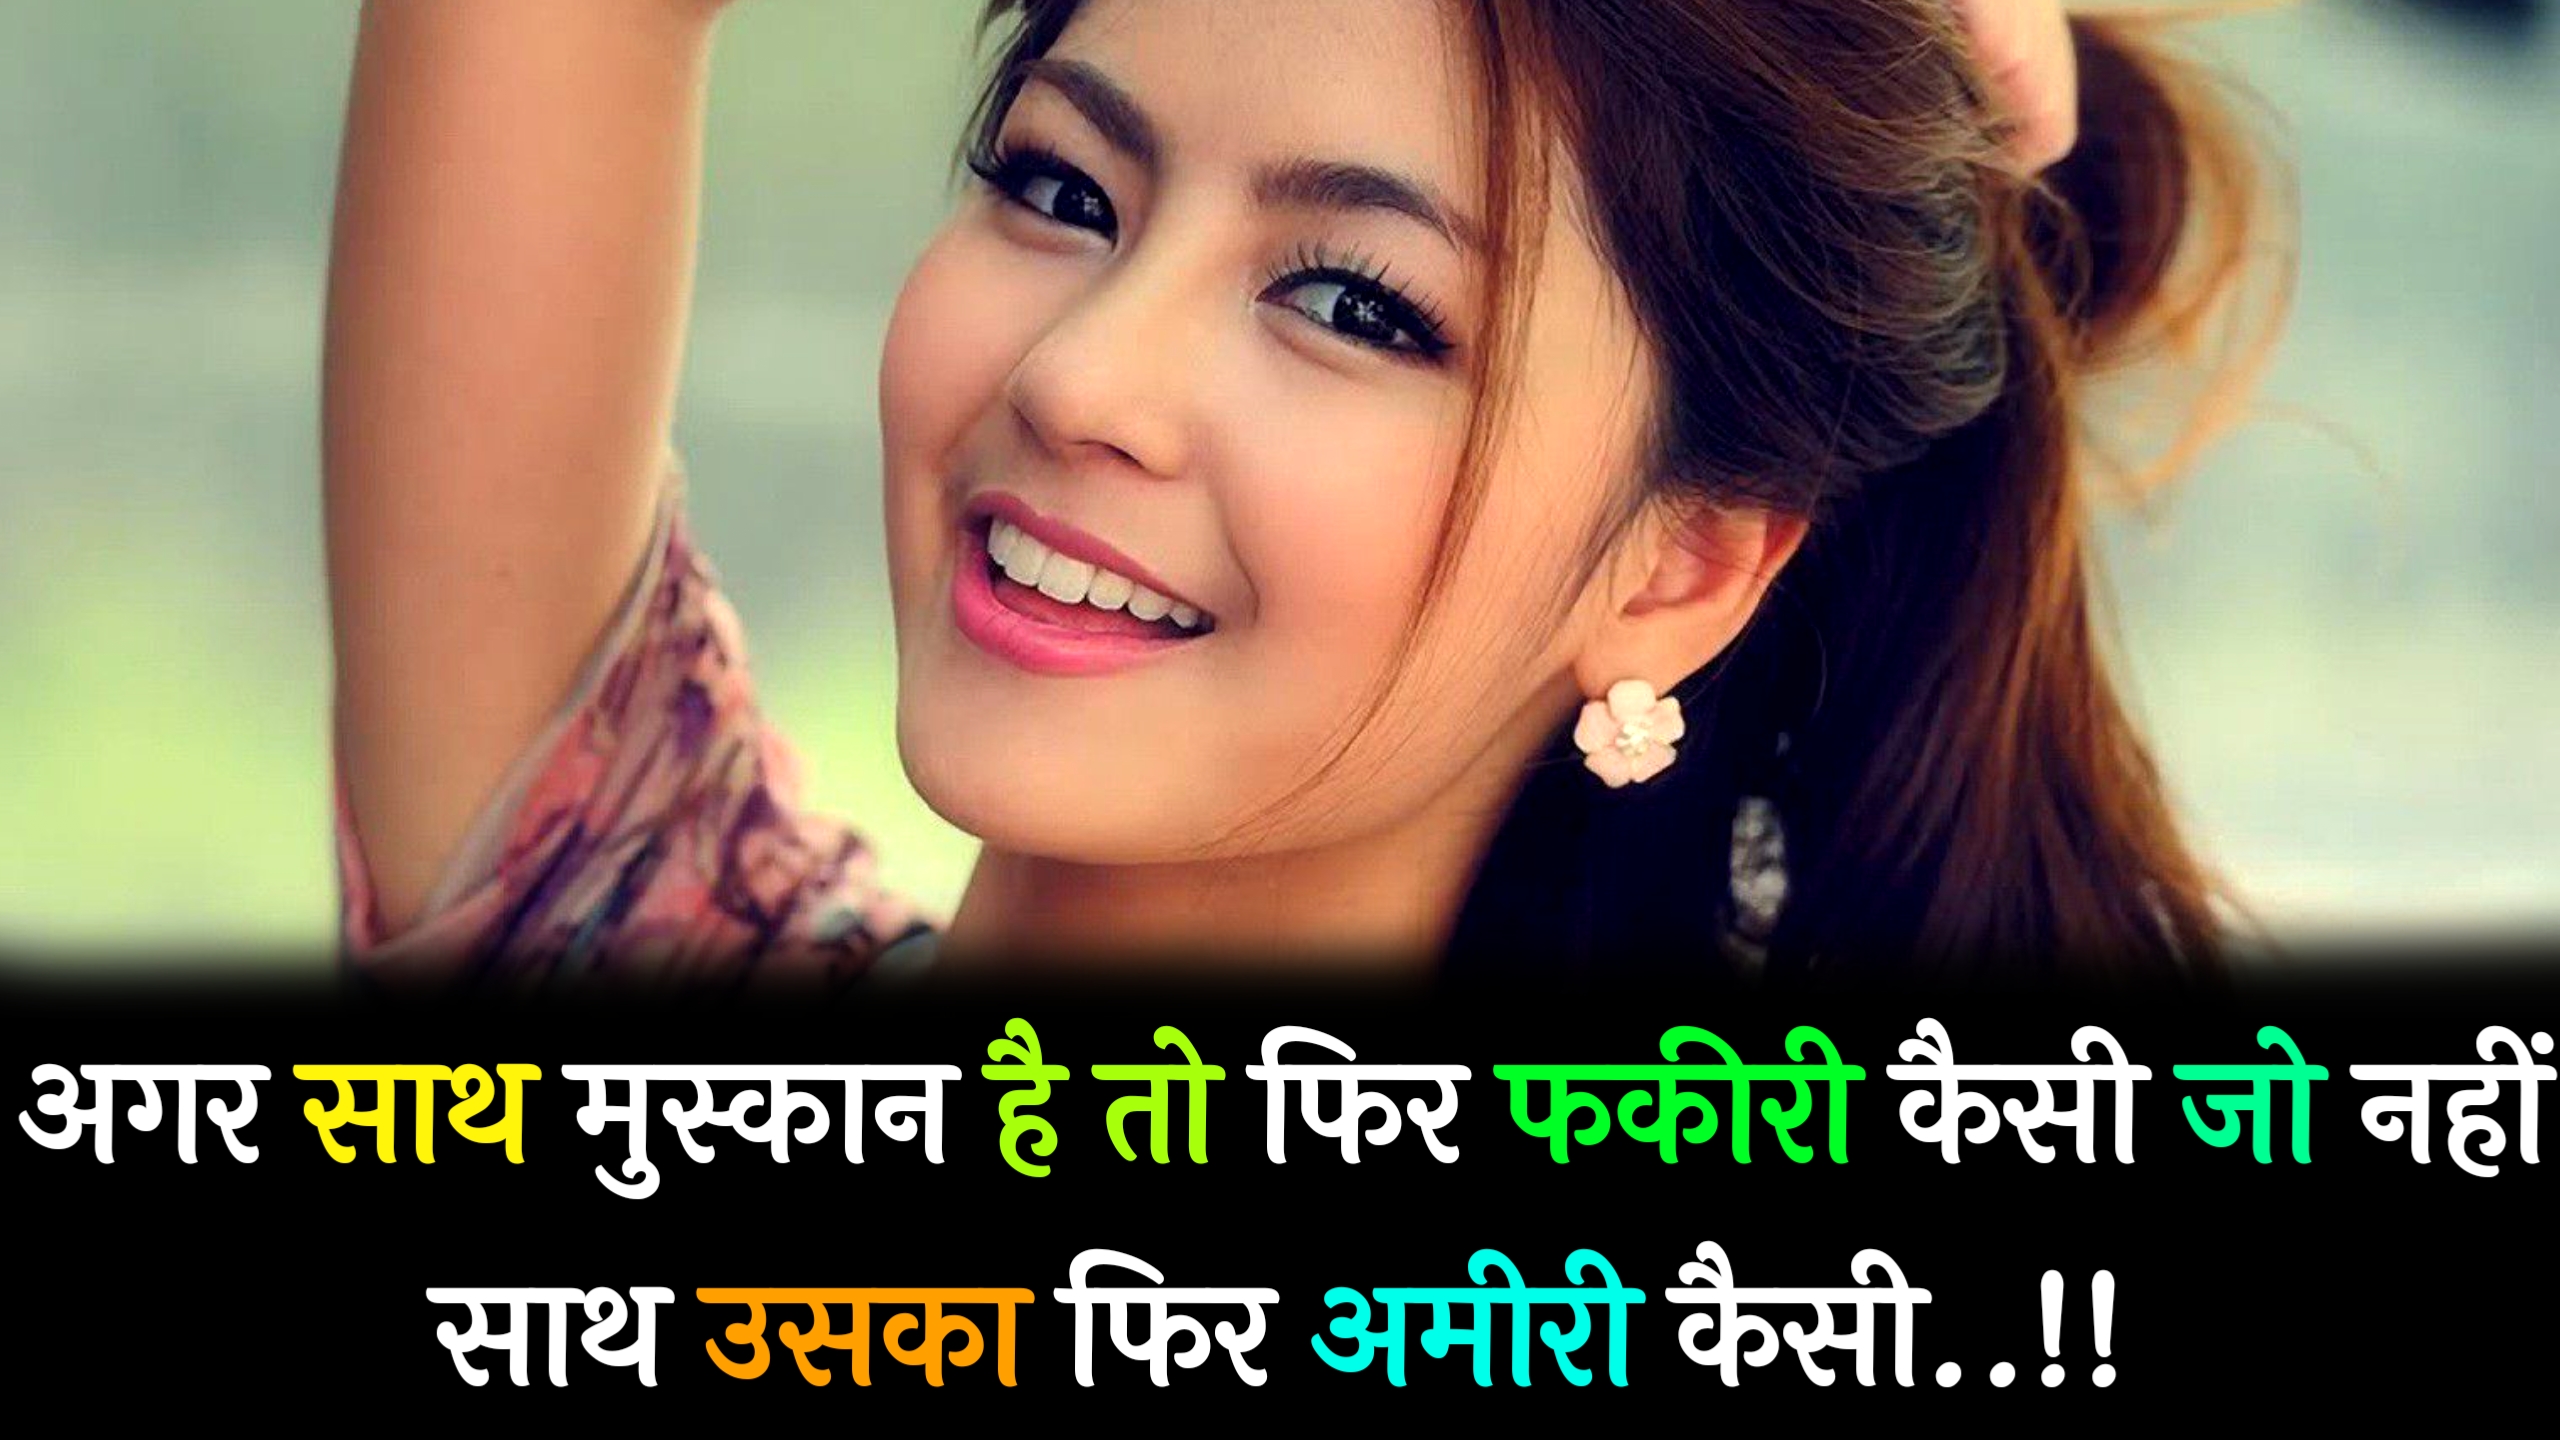 Smile quotes in Hindi 2023 | स्माइल कोट्स इन हिंदी,smile quotes in hindi with images,smile quotes in hindi shayari,fake smile quotes ,fake smile quotes in hindi